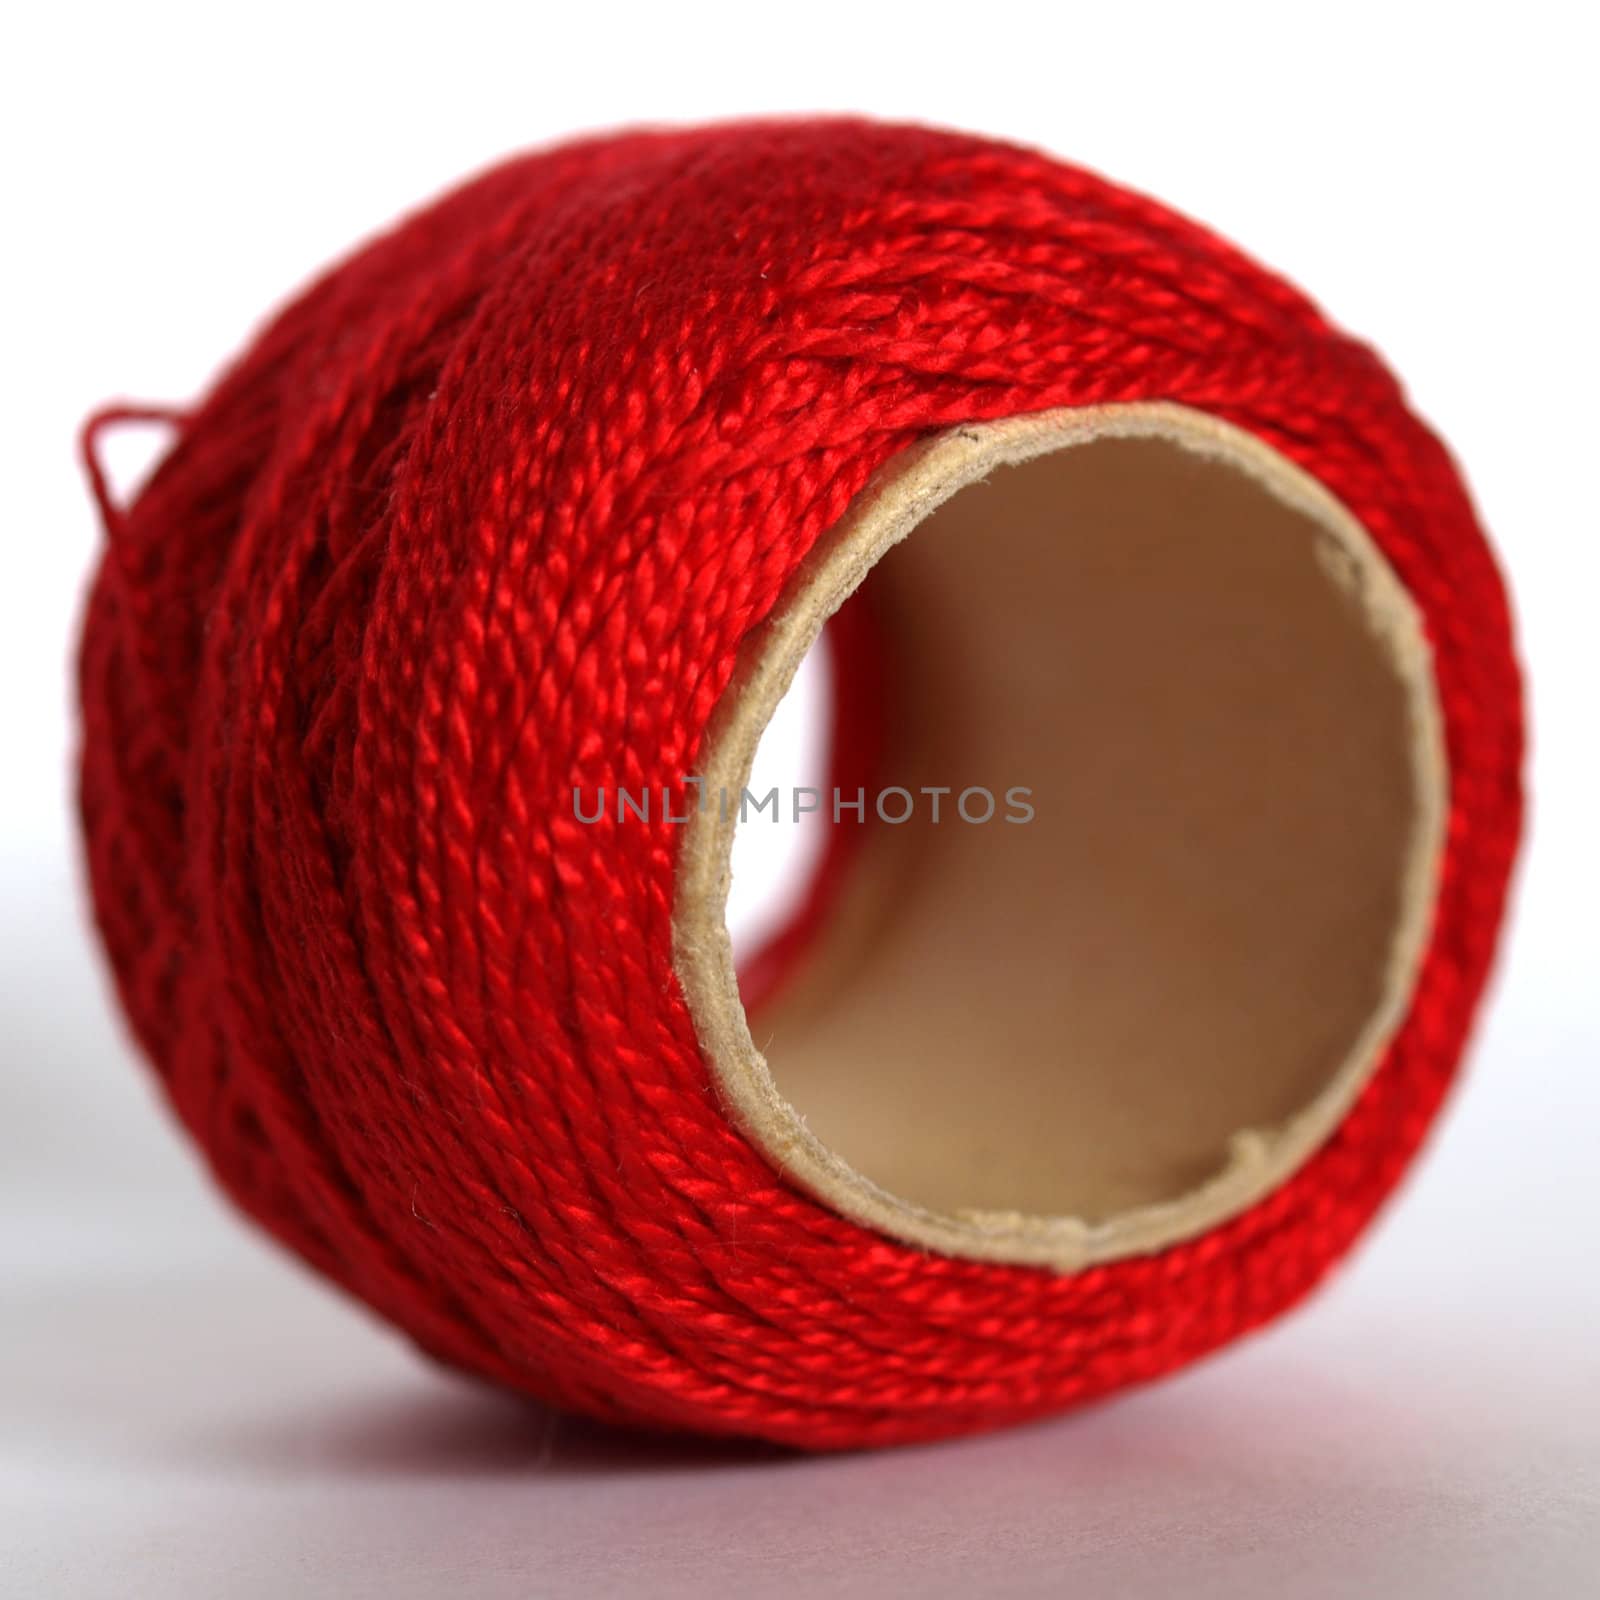 Wool thread spool